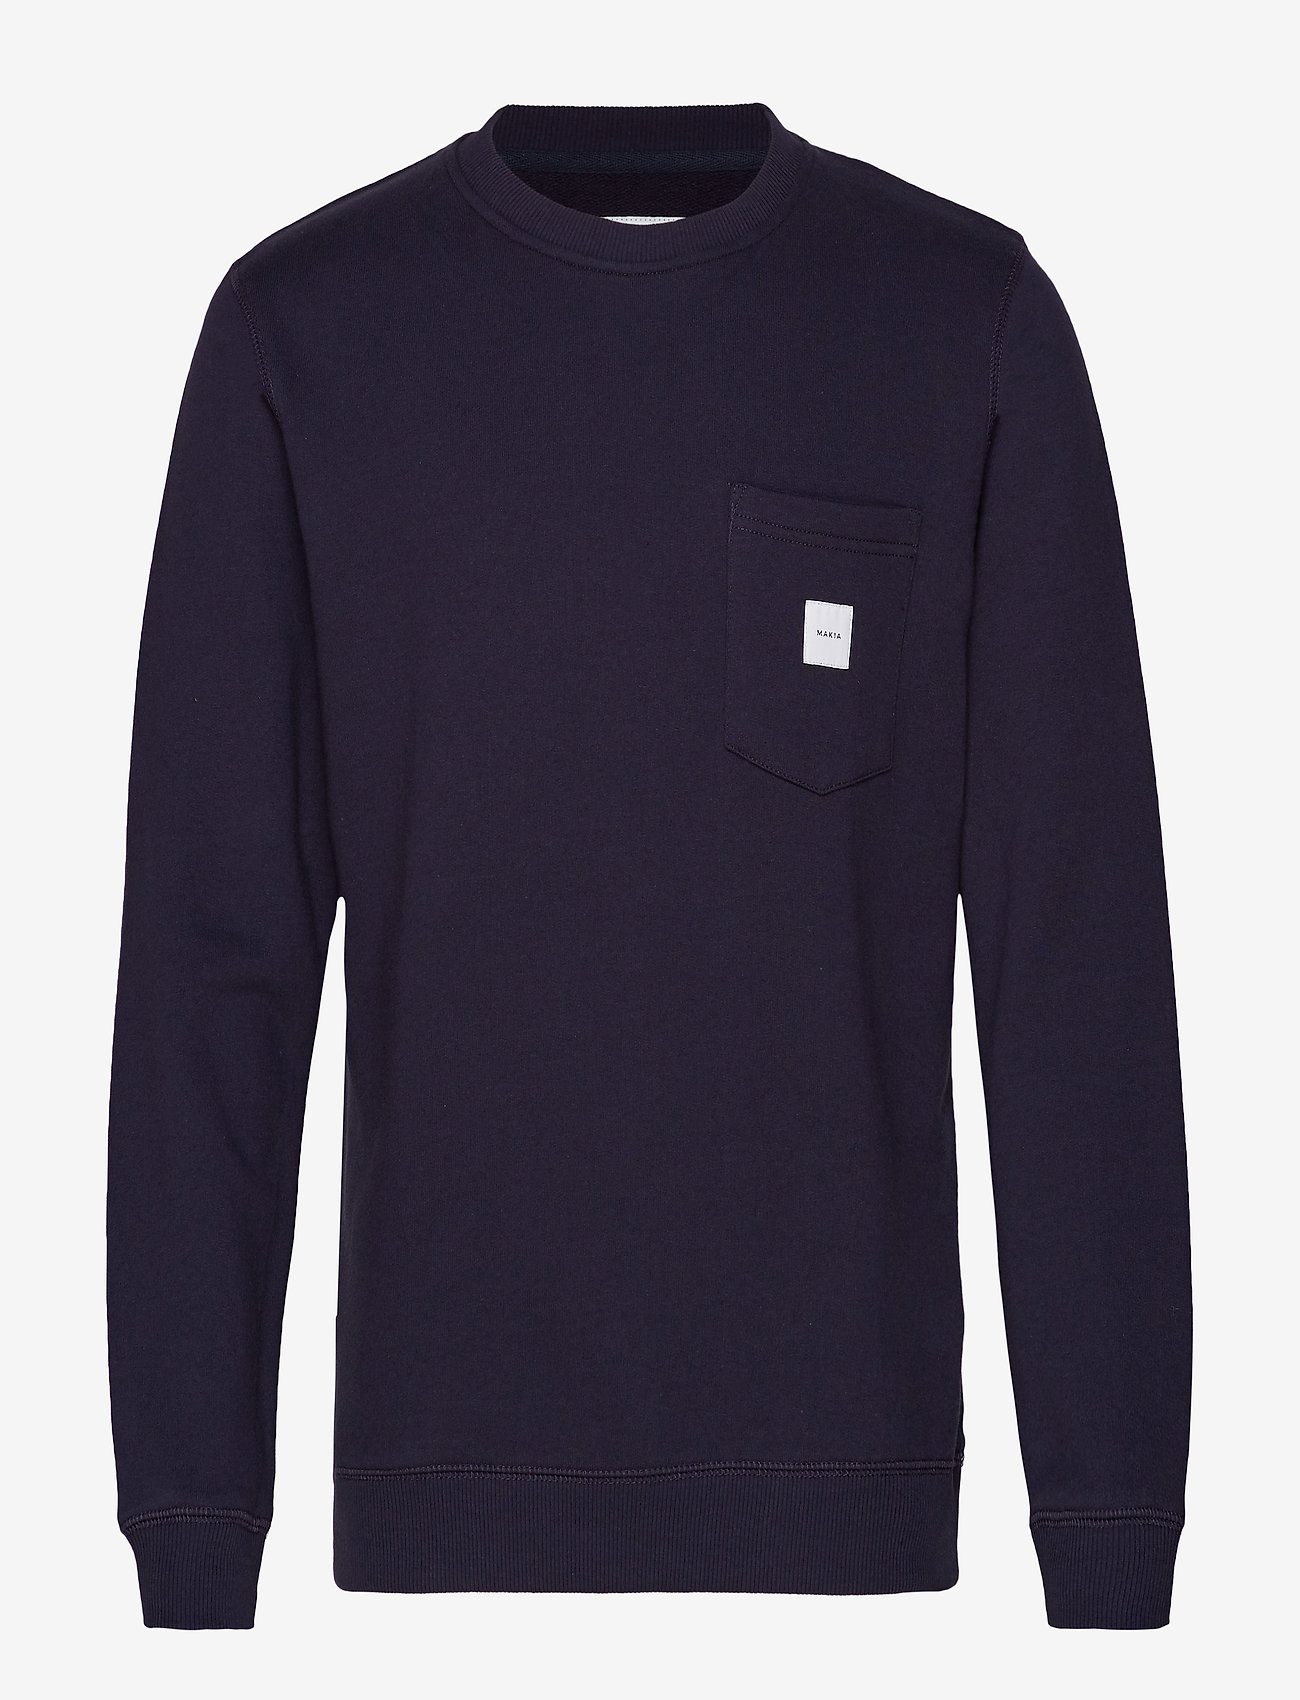 Makia - Square Pocket Sweatshirt - sweatshirts - dark blue - 0